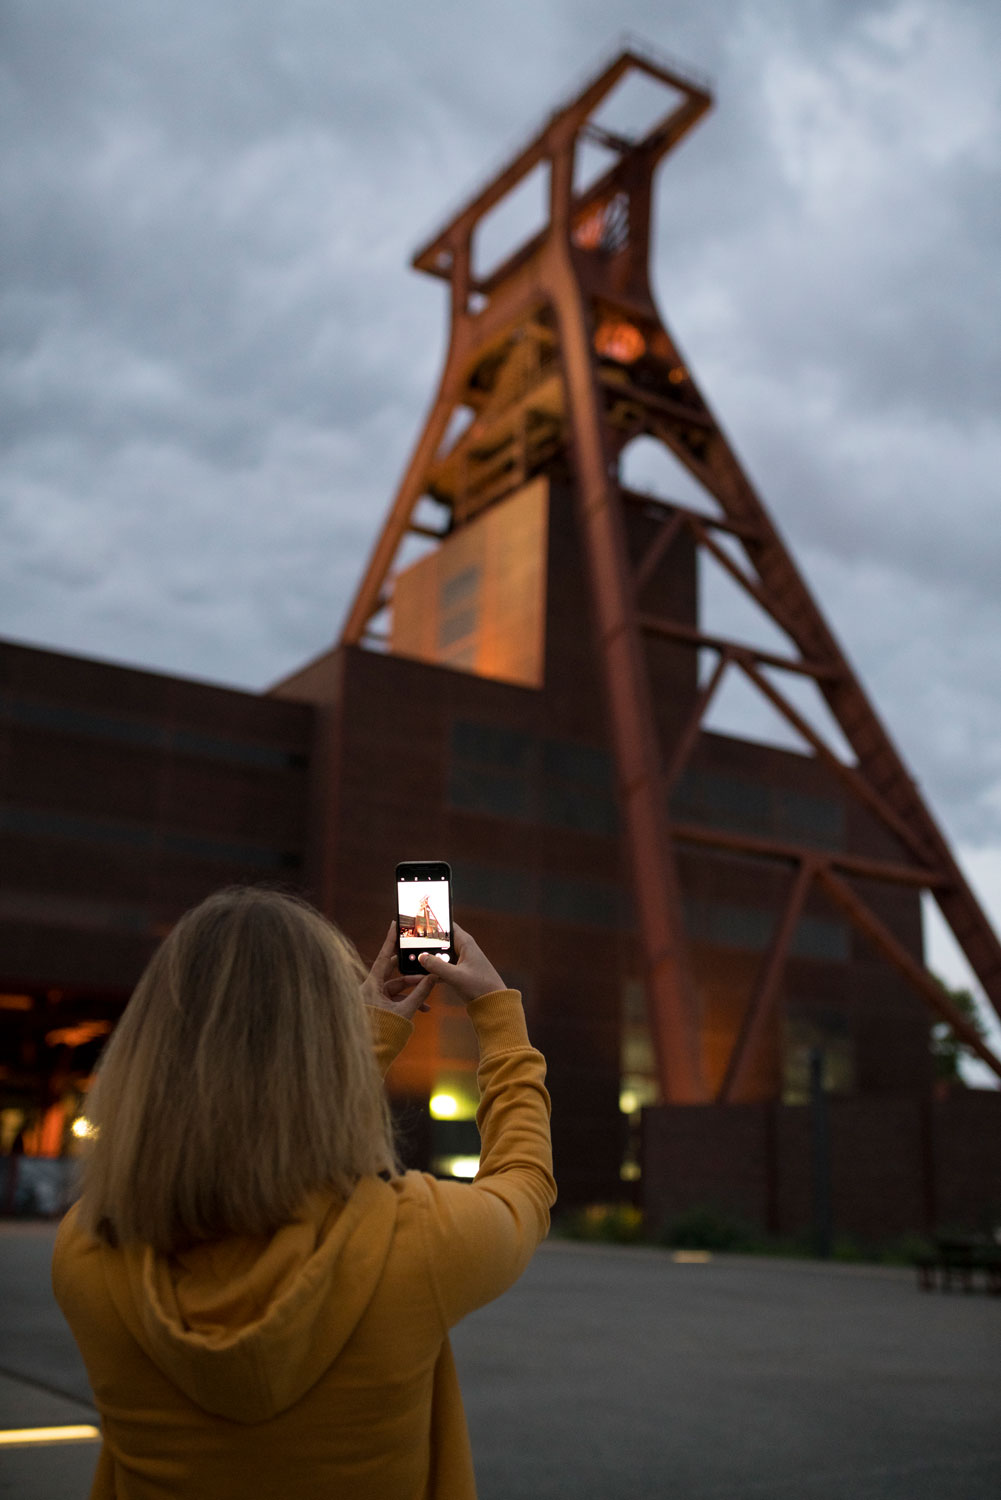 {:gb}A woman with a smartphone photographs the winding tower of the German Mining Museum in Bochum at sunset.{:}{:de}Eine Frau mit Smartphone fotografiert den Förderturm des Deutschen Bergbau-Museums in Bochum bei Sonnenuntergang.{:}